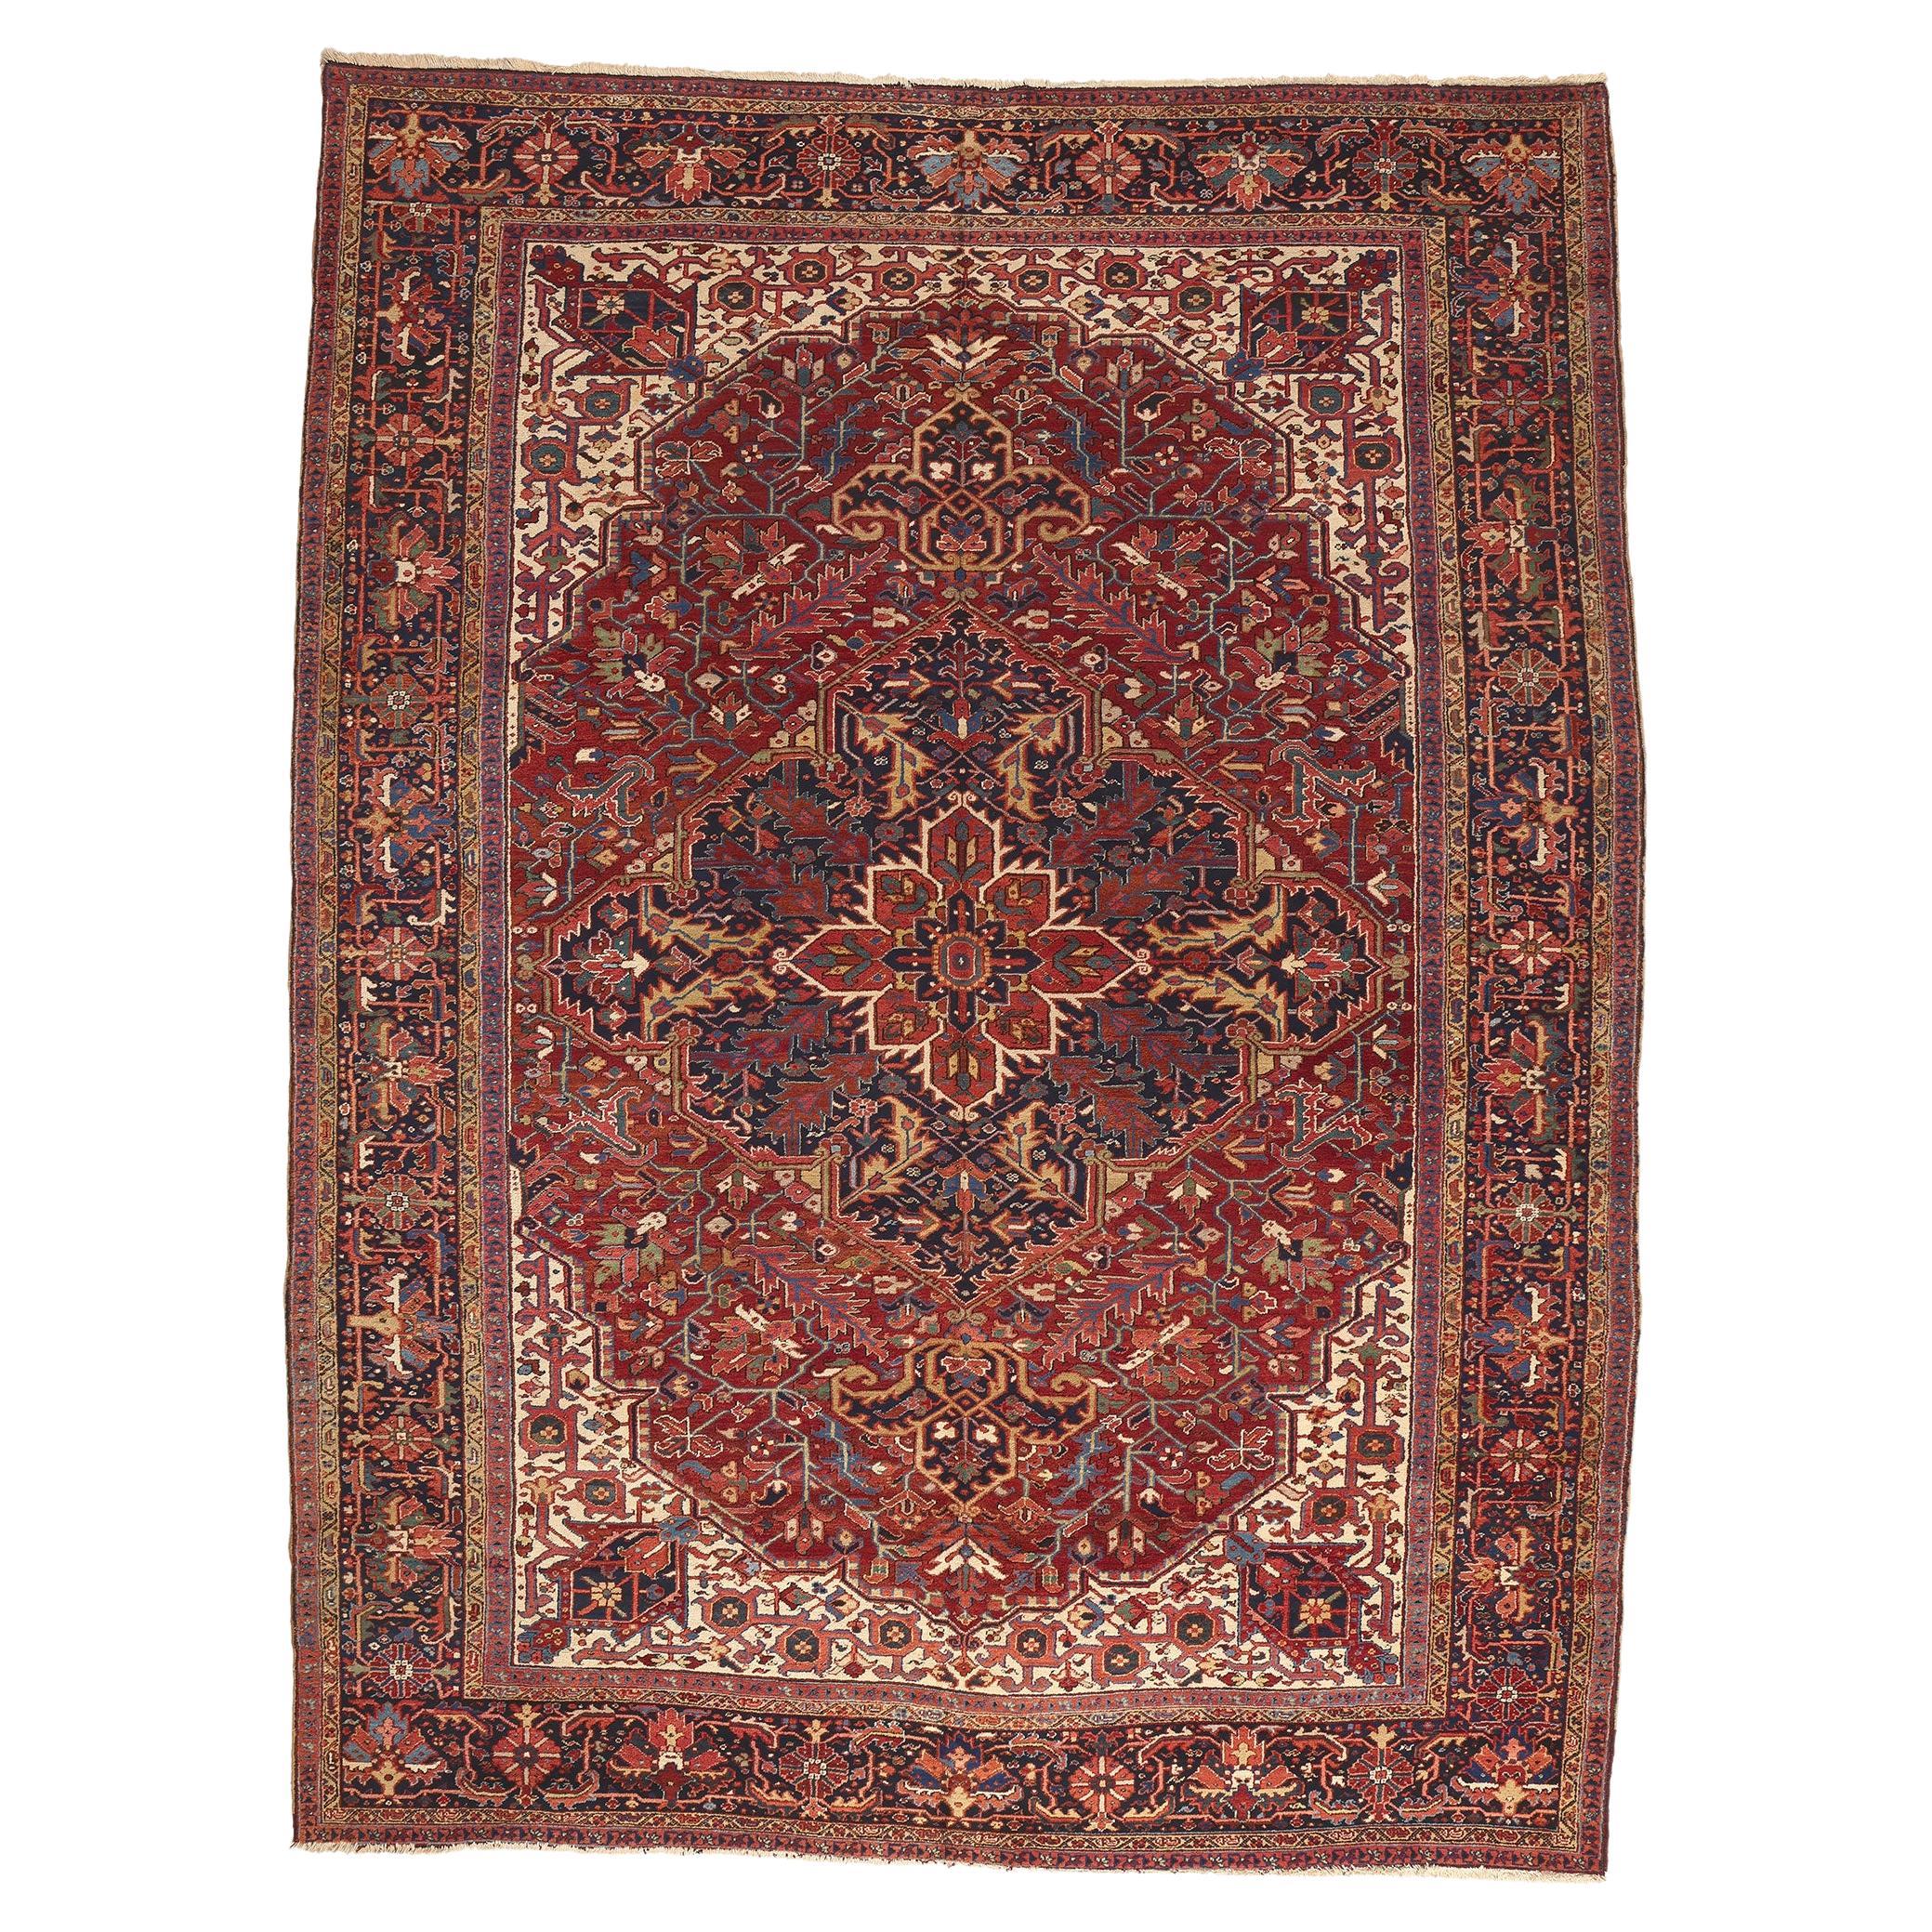 1920s Extra-Large Antique Red Persian Rug Heriz Carpet 